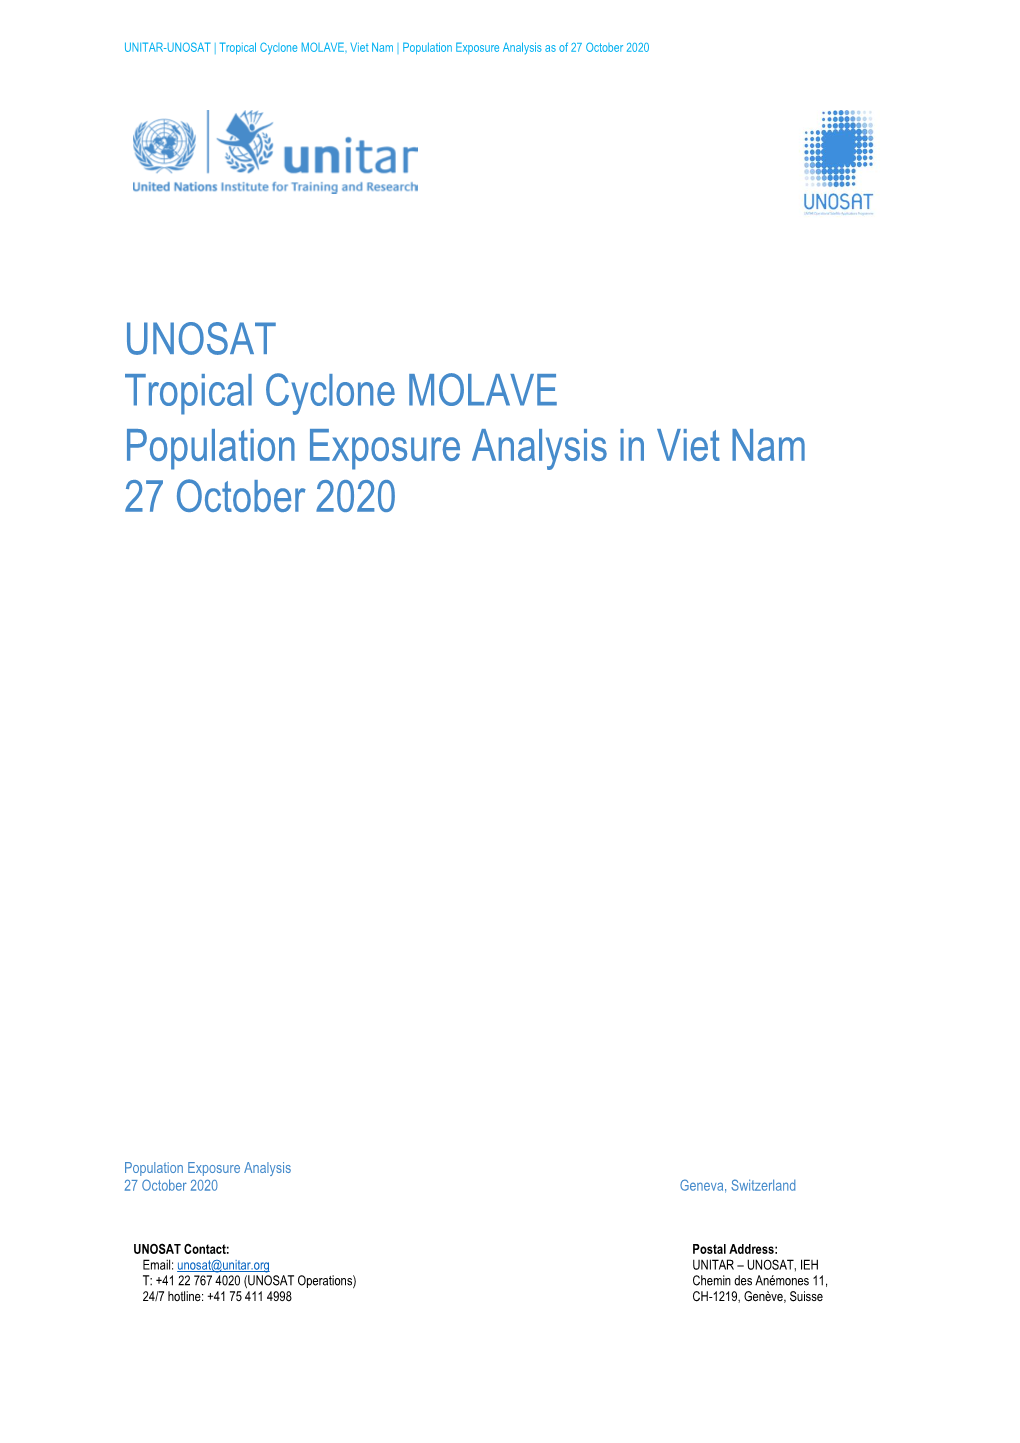 UNOSAT Tropical Cyclone MOLAVE Population Exposure Analysis in Viet Nam 27 October 2020